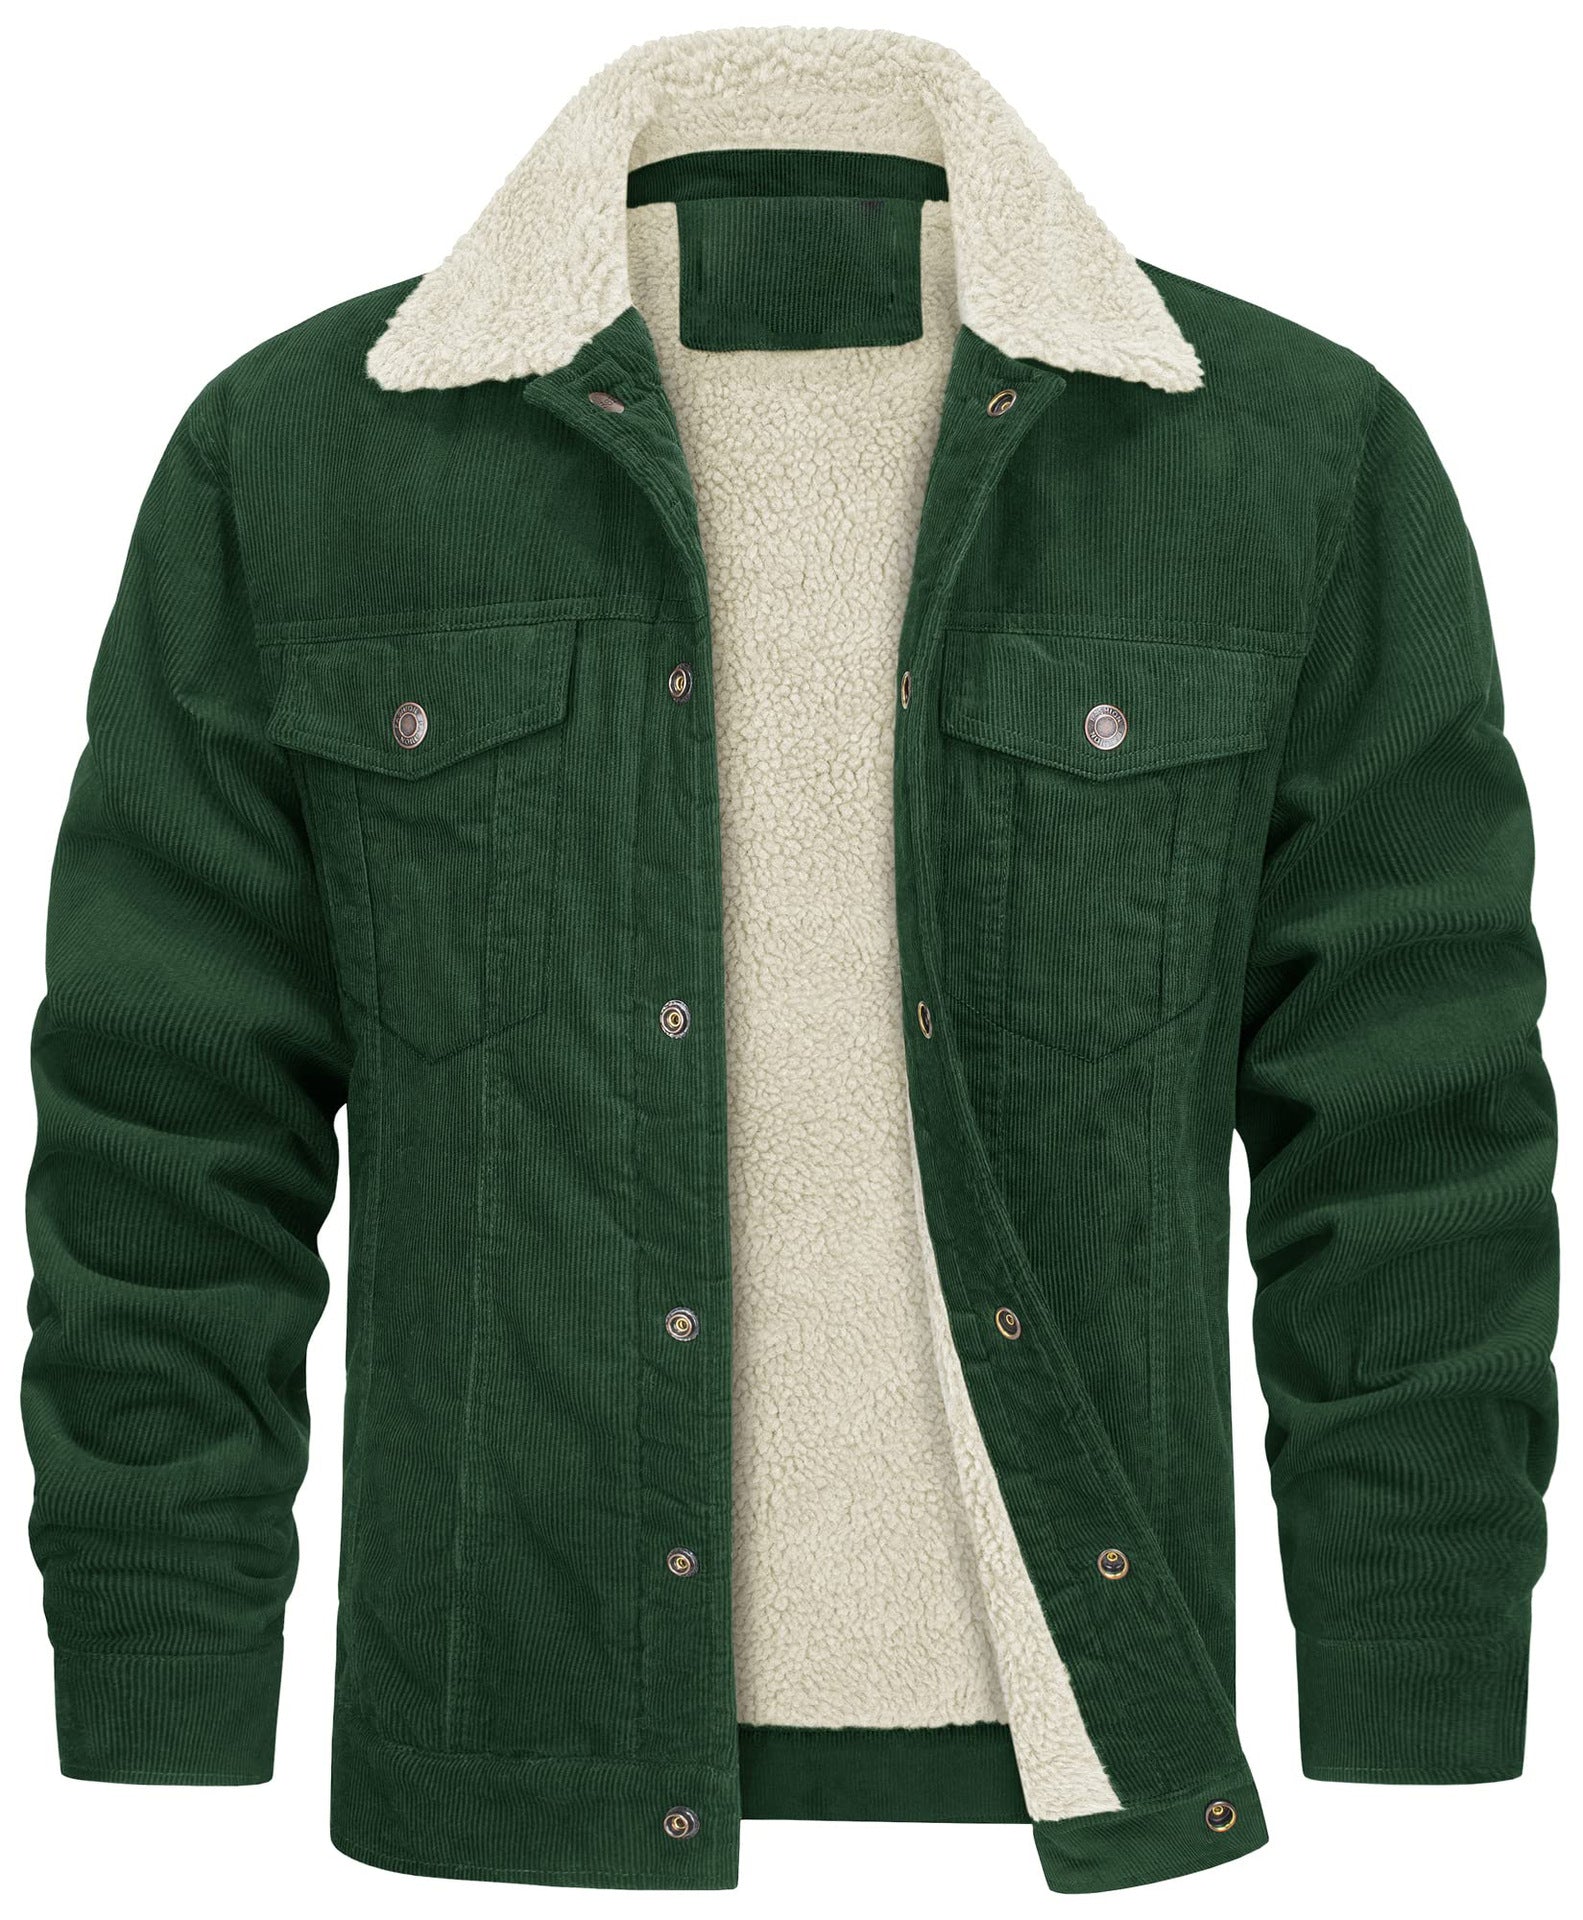 Casual Winter Long Sleeves Velvet Jacket Coats for Men-Coats & Jackets-Green-S-Free Shipping Leatheretro